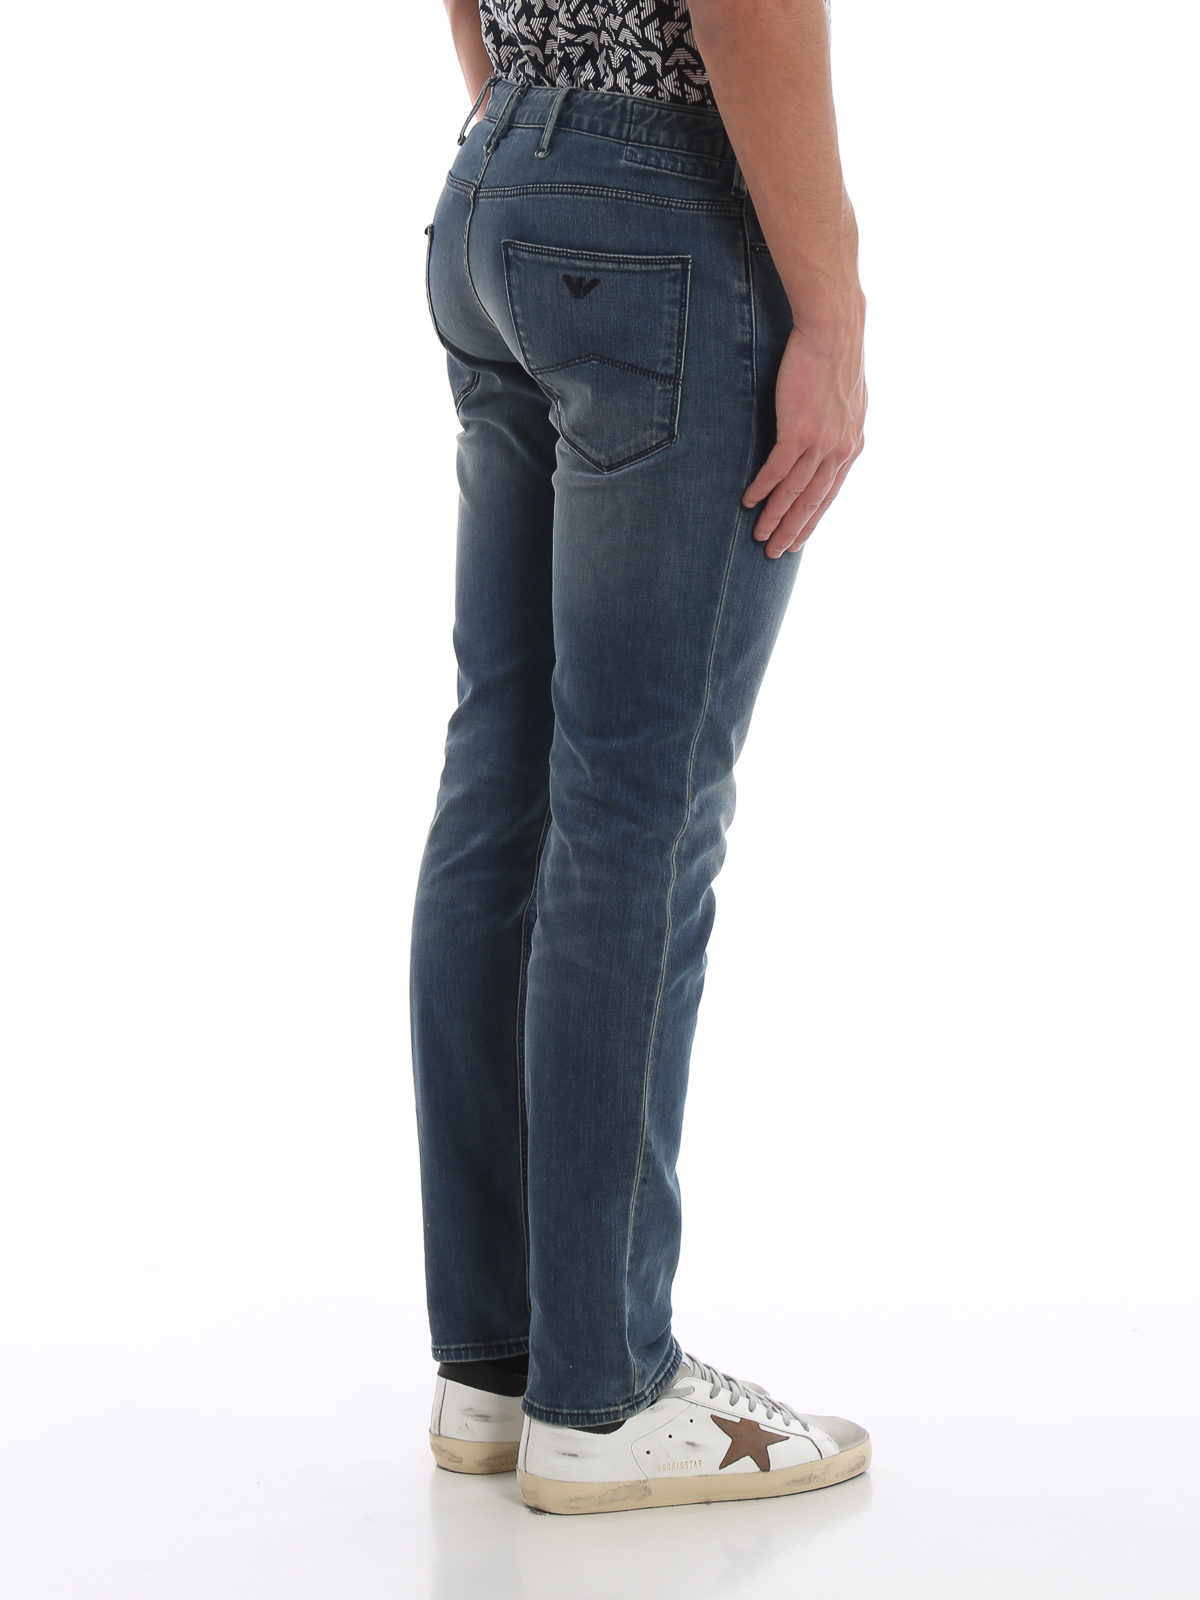 j06 slim fit jeans